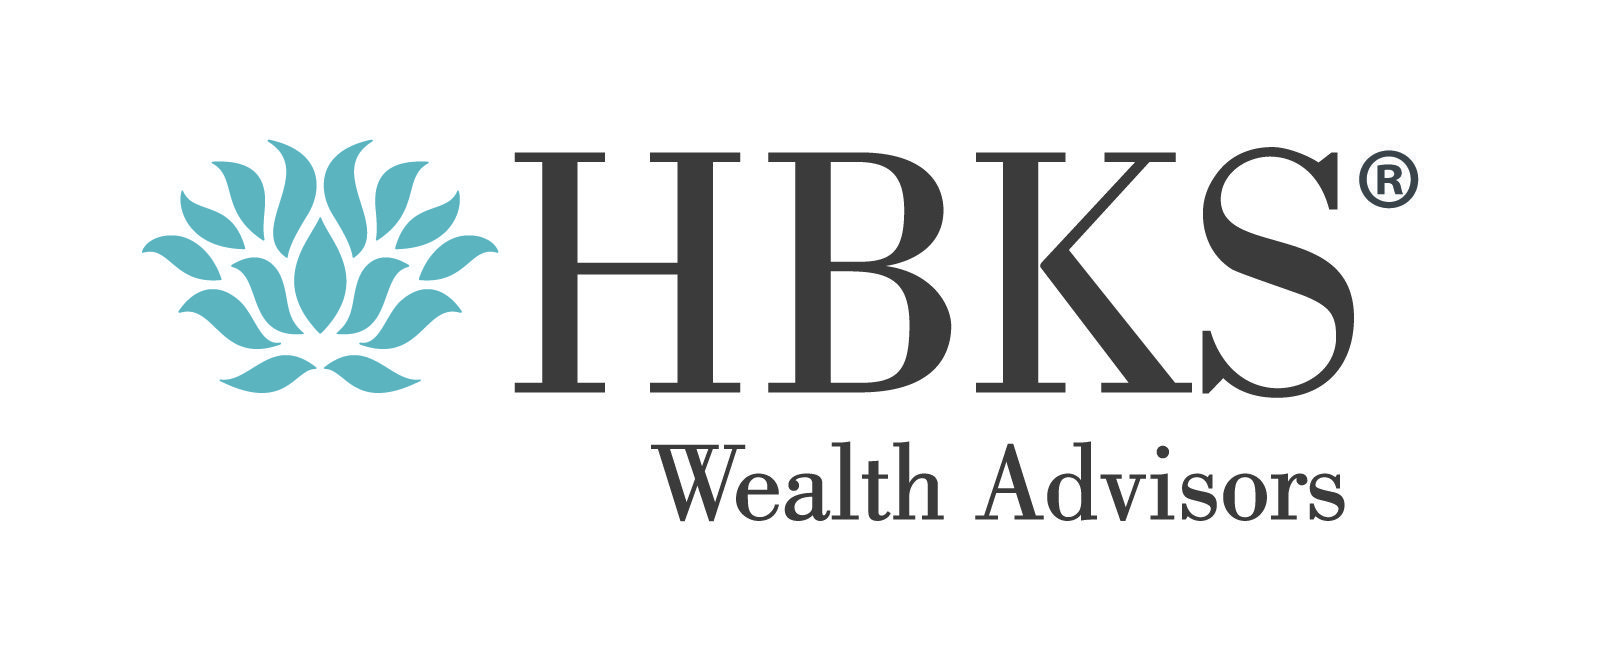 HBKS_Logo_(R)-min